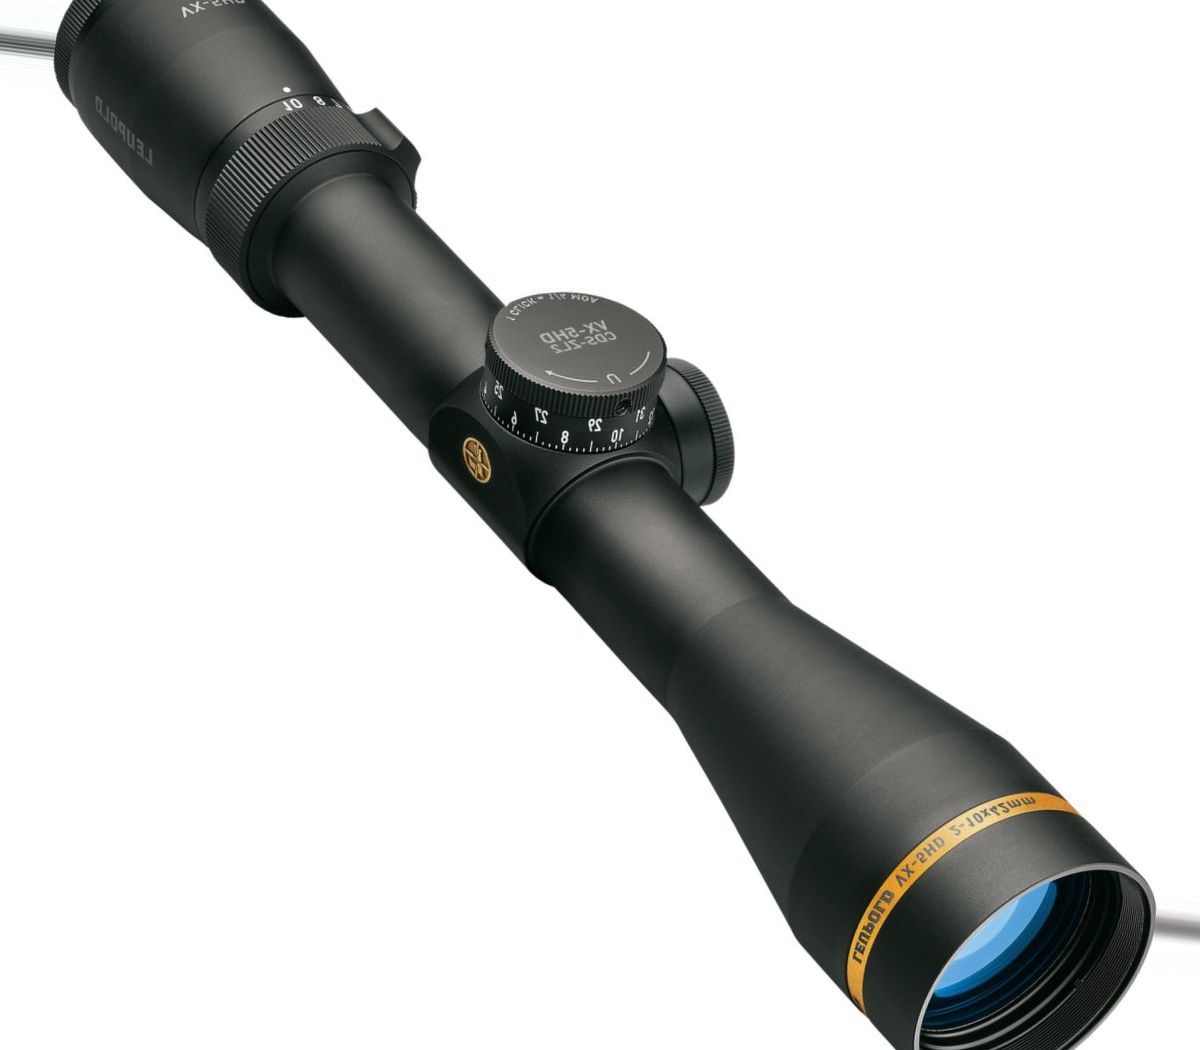 Leupold® VX-5HD Riflescopes